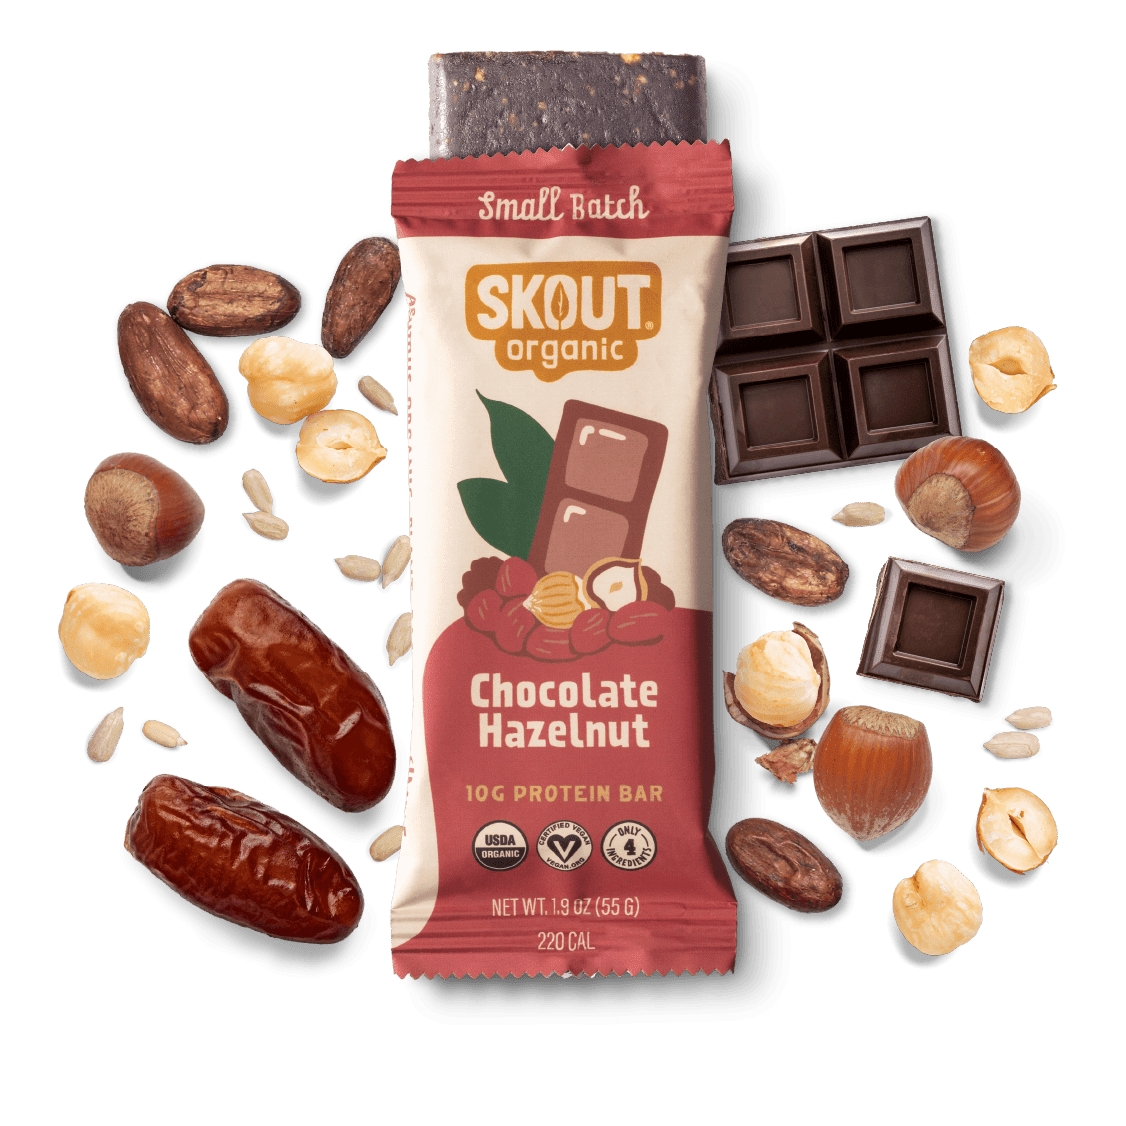 Chocolate Hazelnut Protein Bar Build Your Own Box - Single Bar Skout Organic Bar 